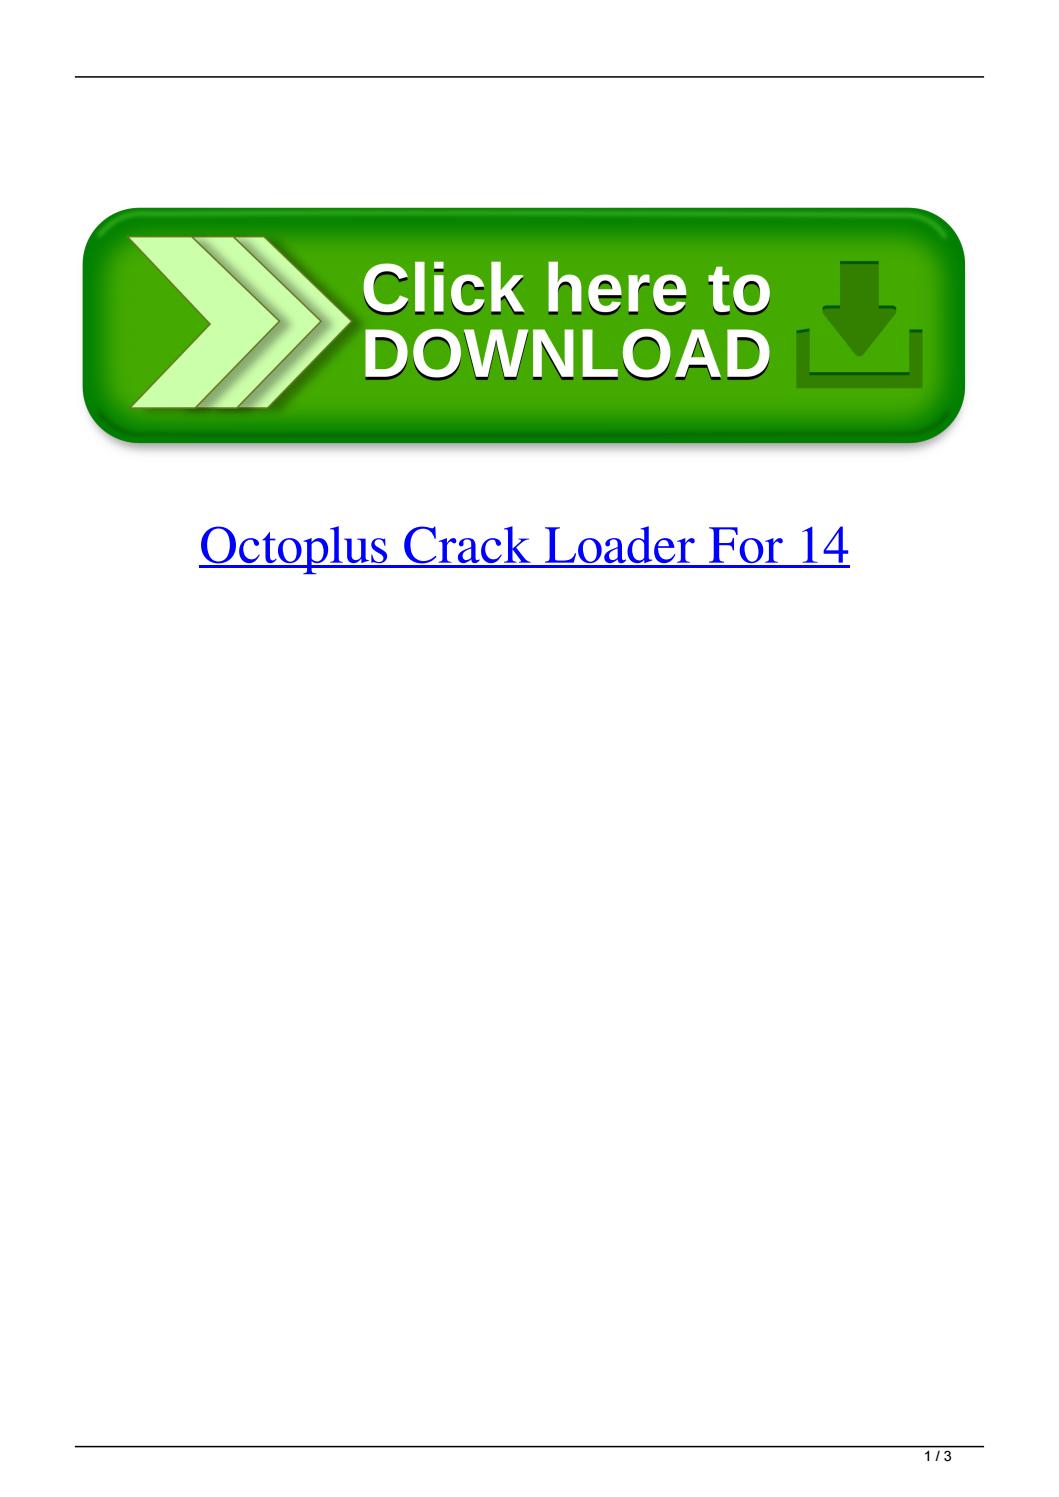 octoplus lg tool crack